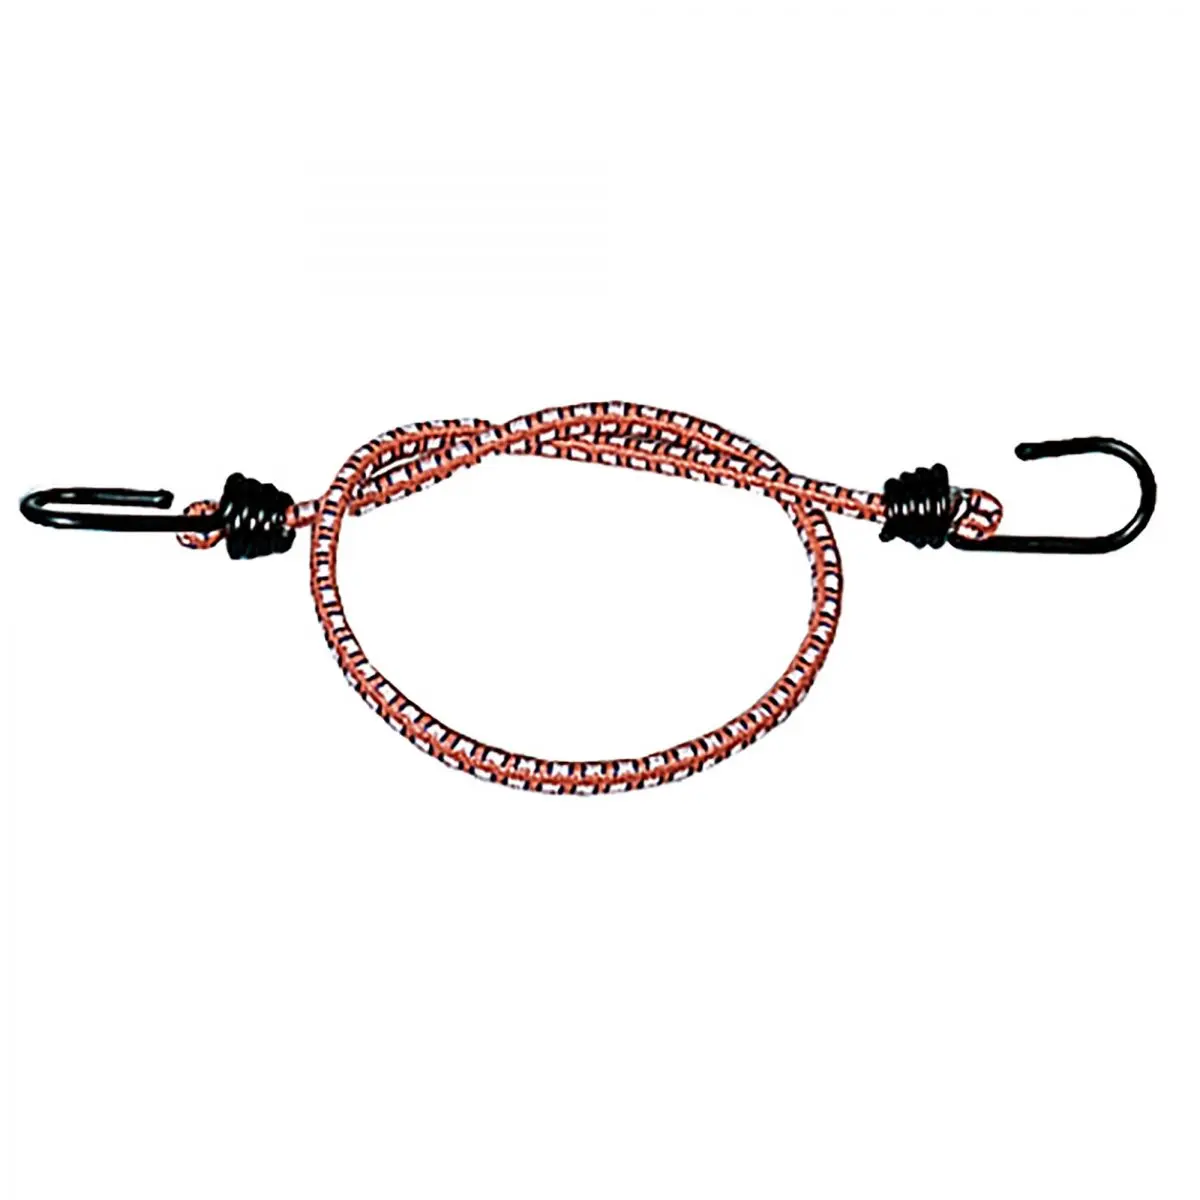 Cablu de tensionare elastic - 100 cm, in ambalaj self-service